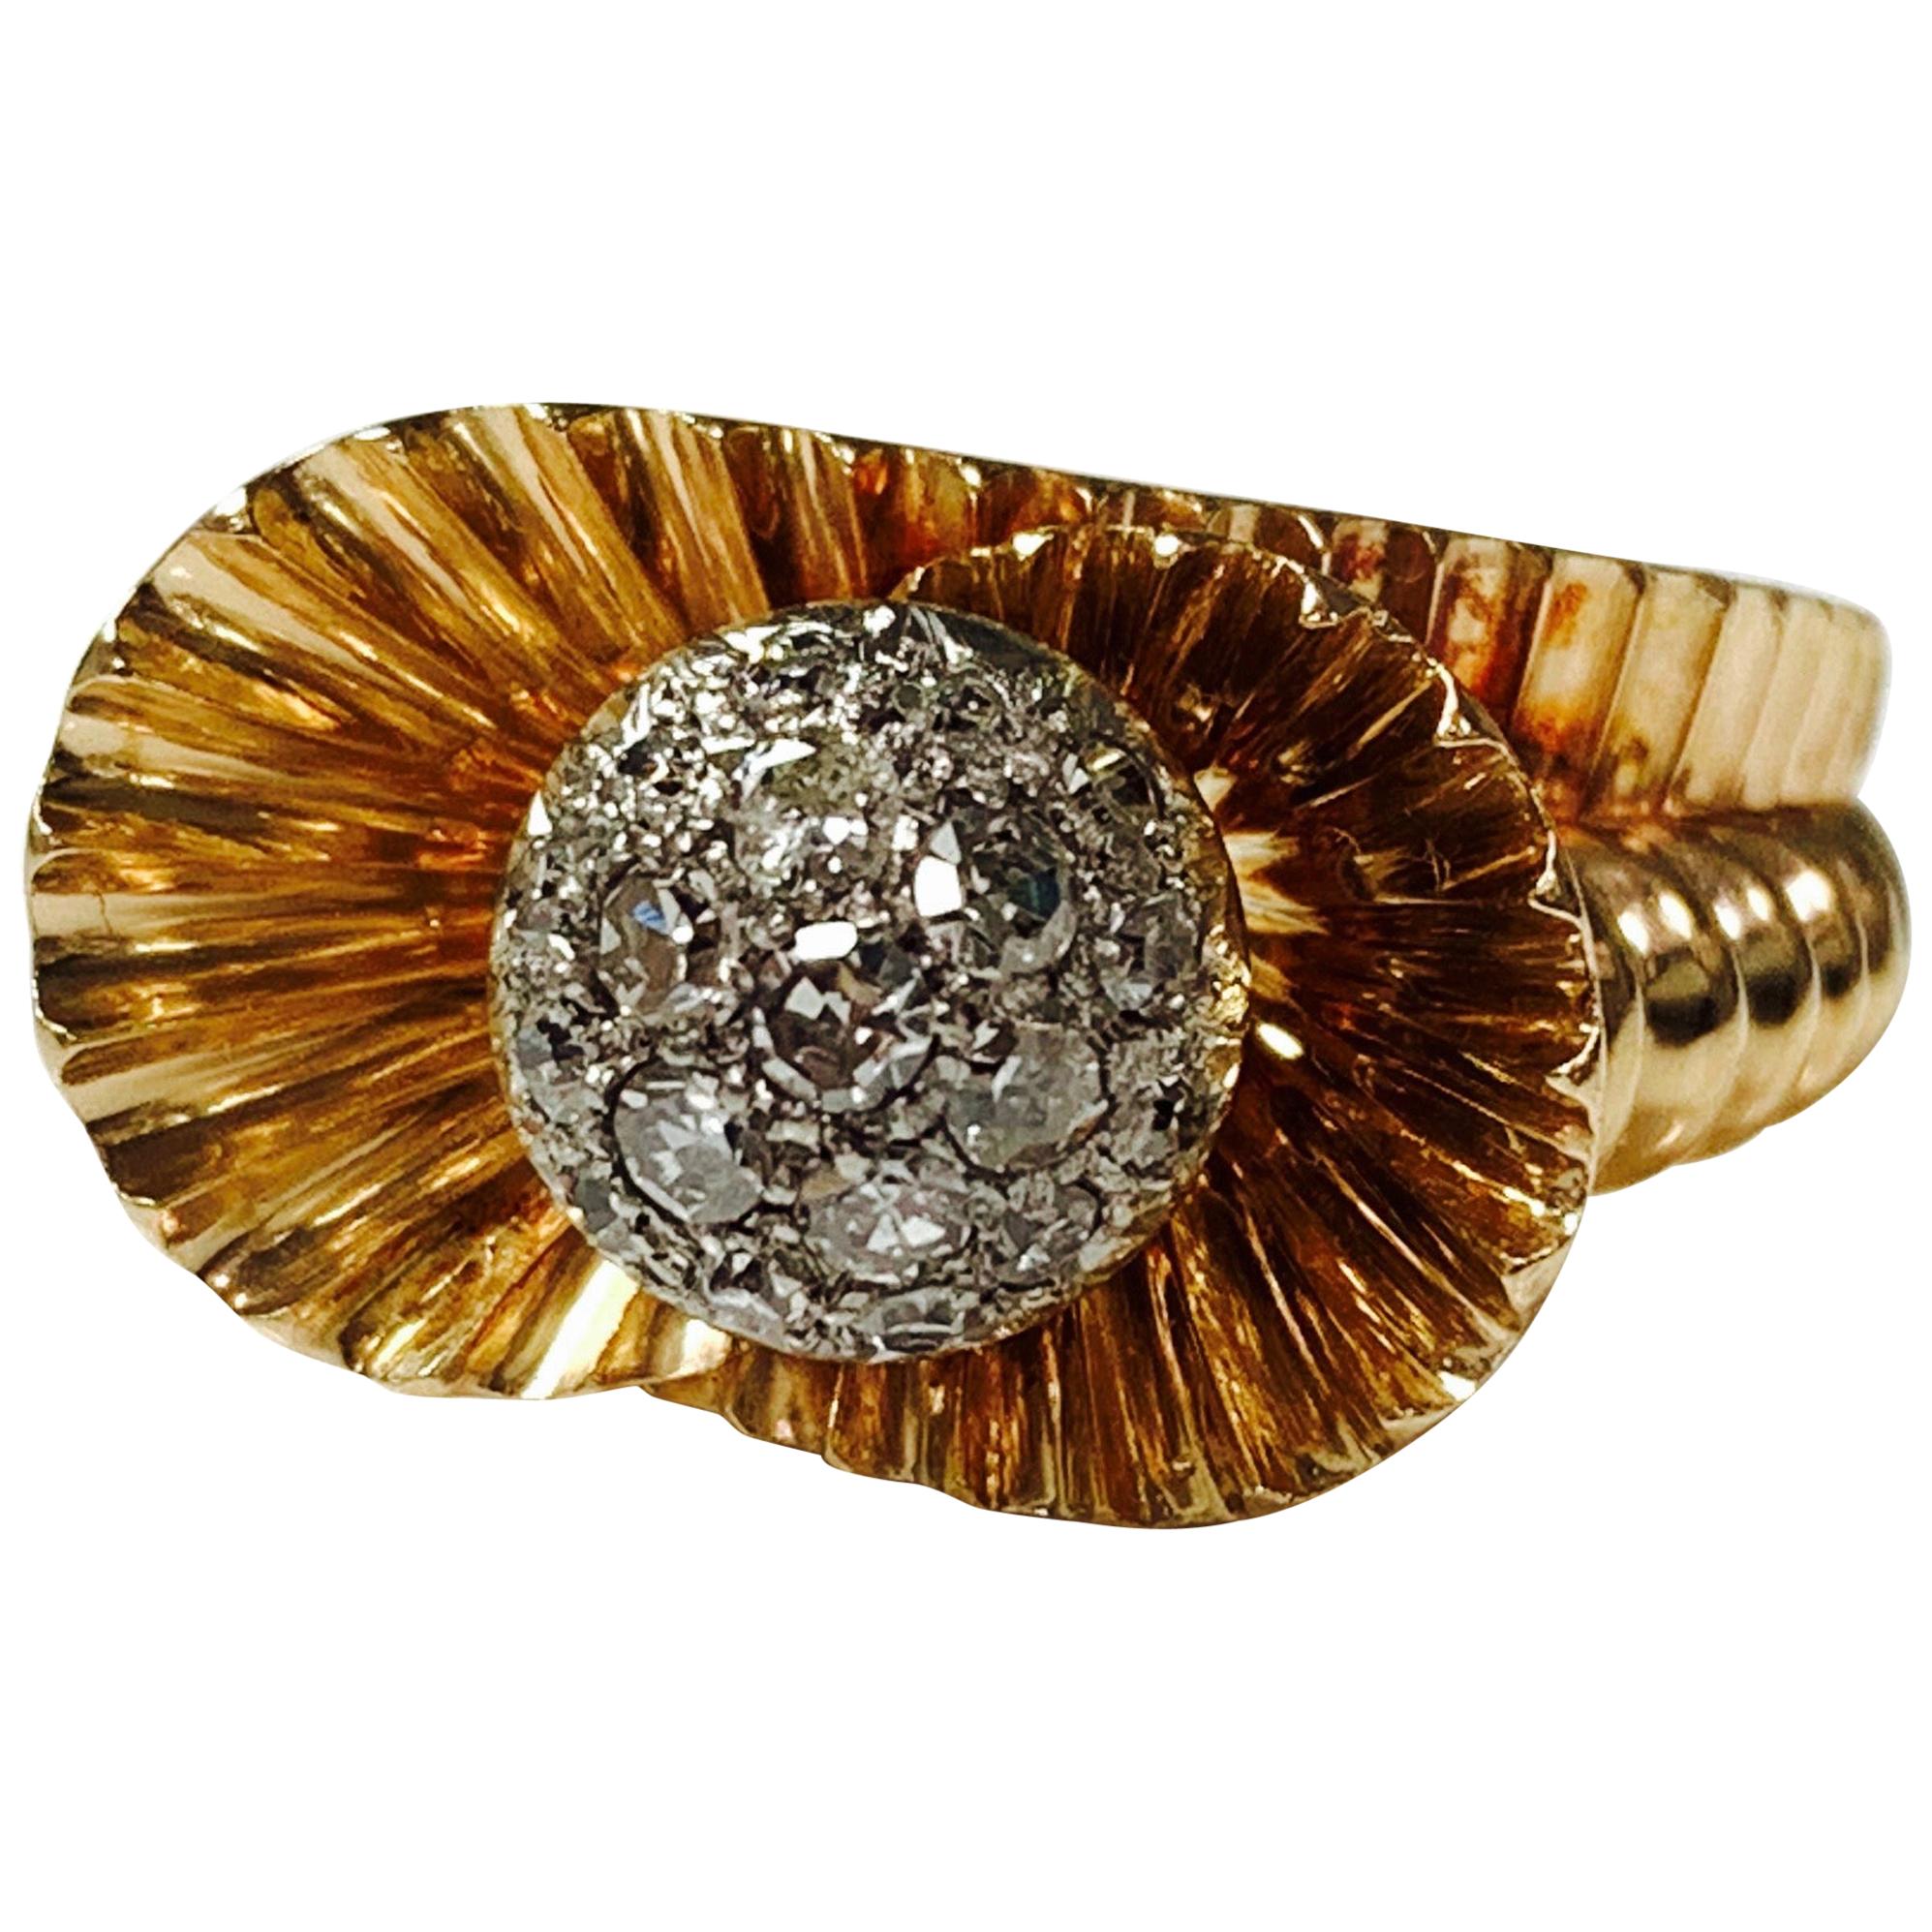 1940 Antique Round Brilliant Diamond Cocktail Ring in 18 Karat Yellow Gold